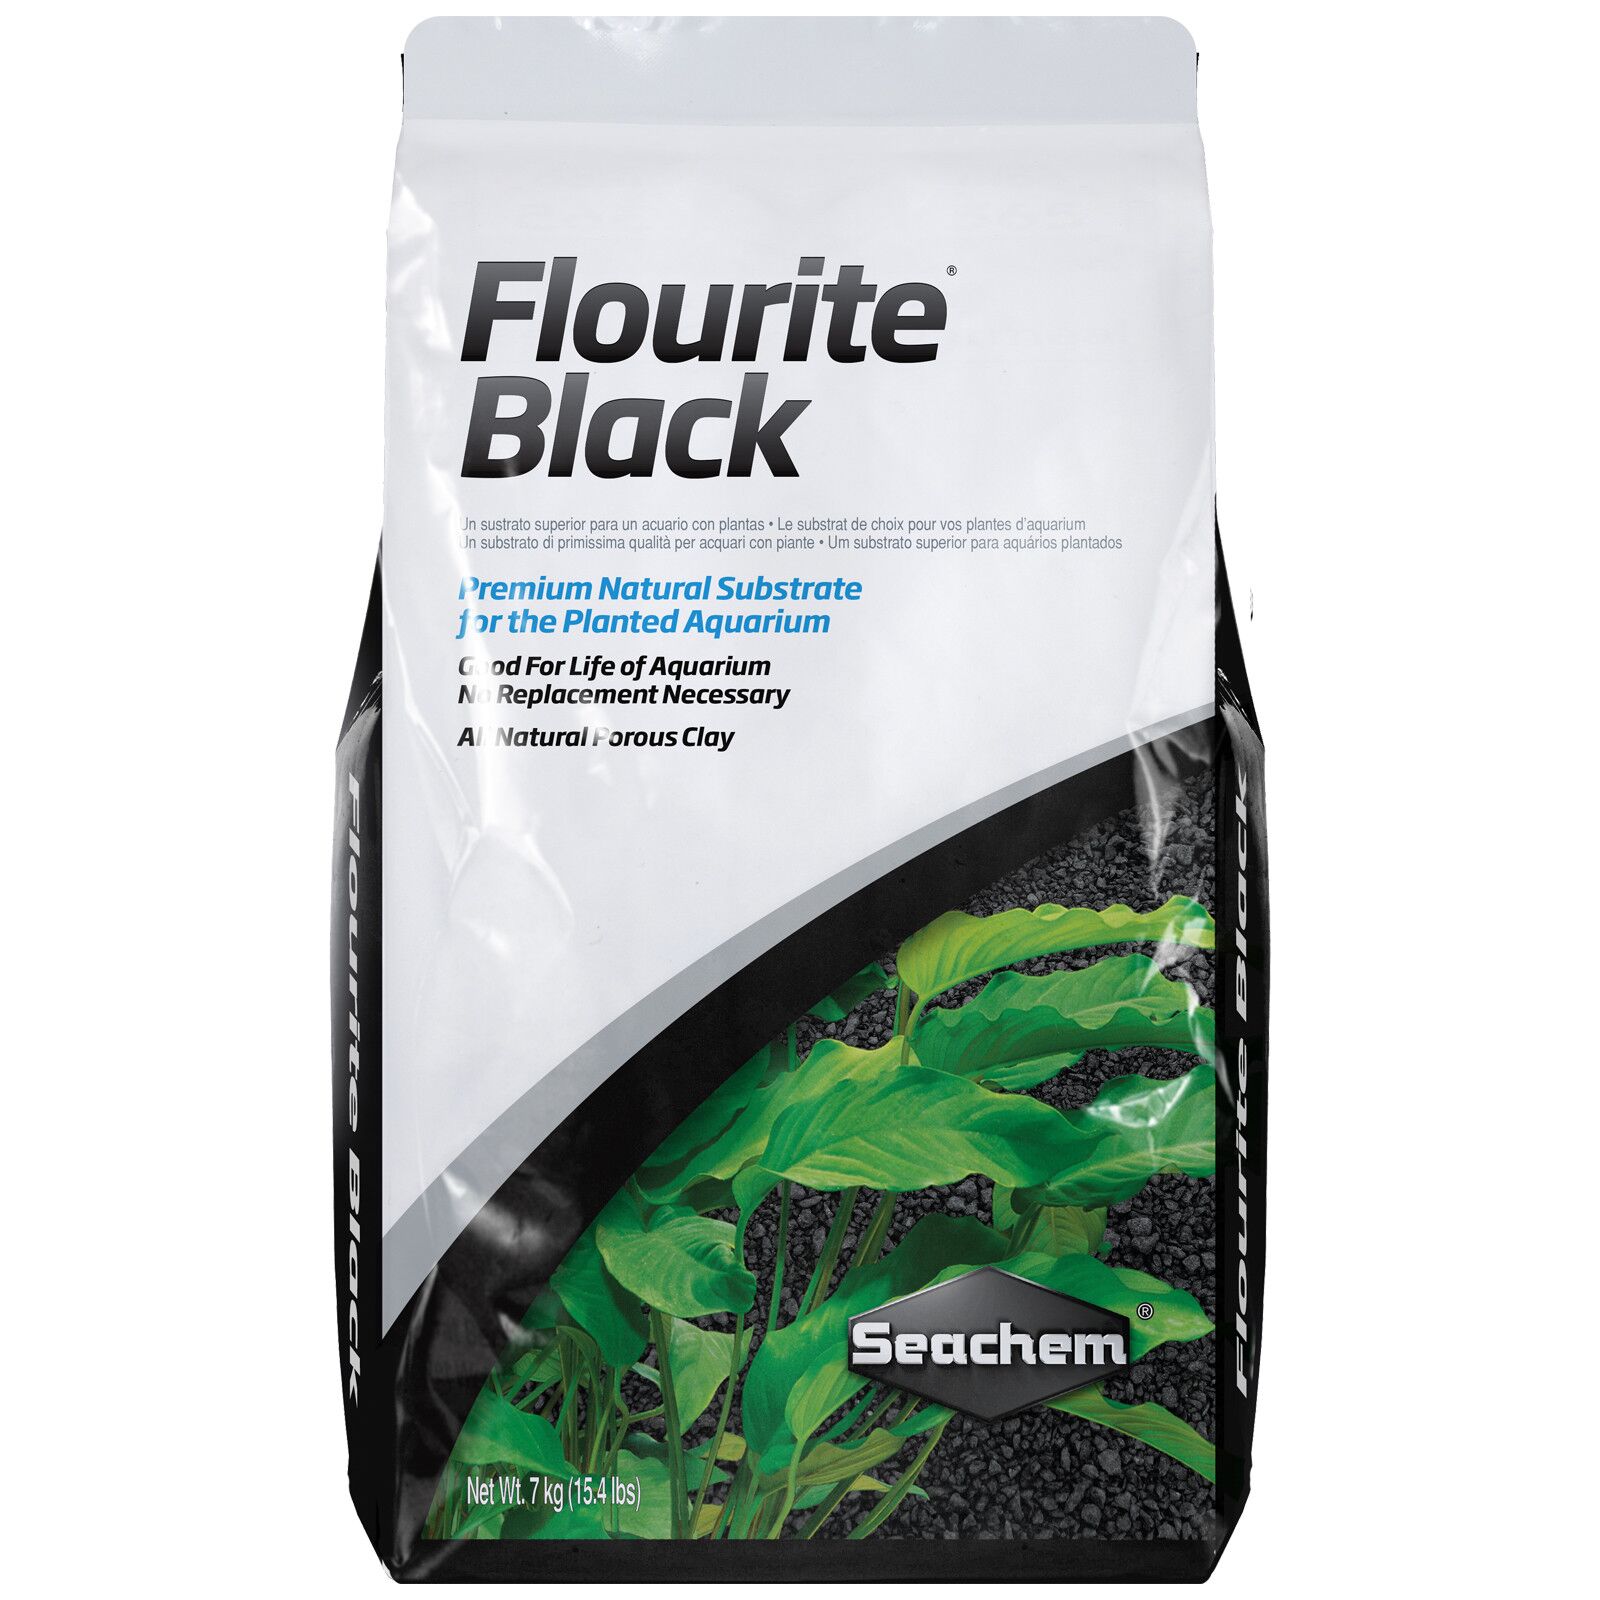 Seachem - Flourite Black